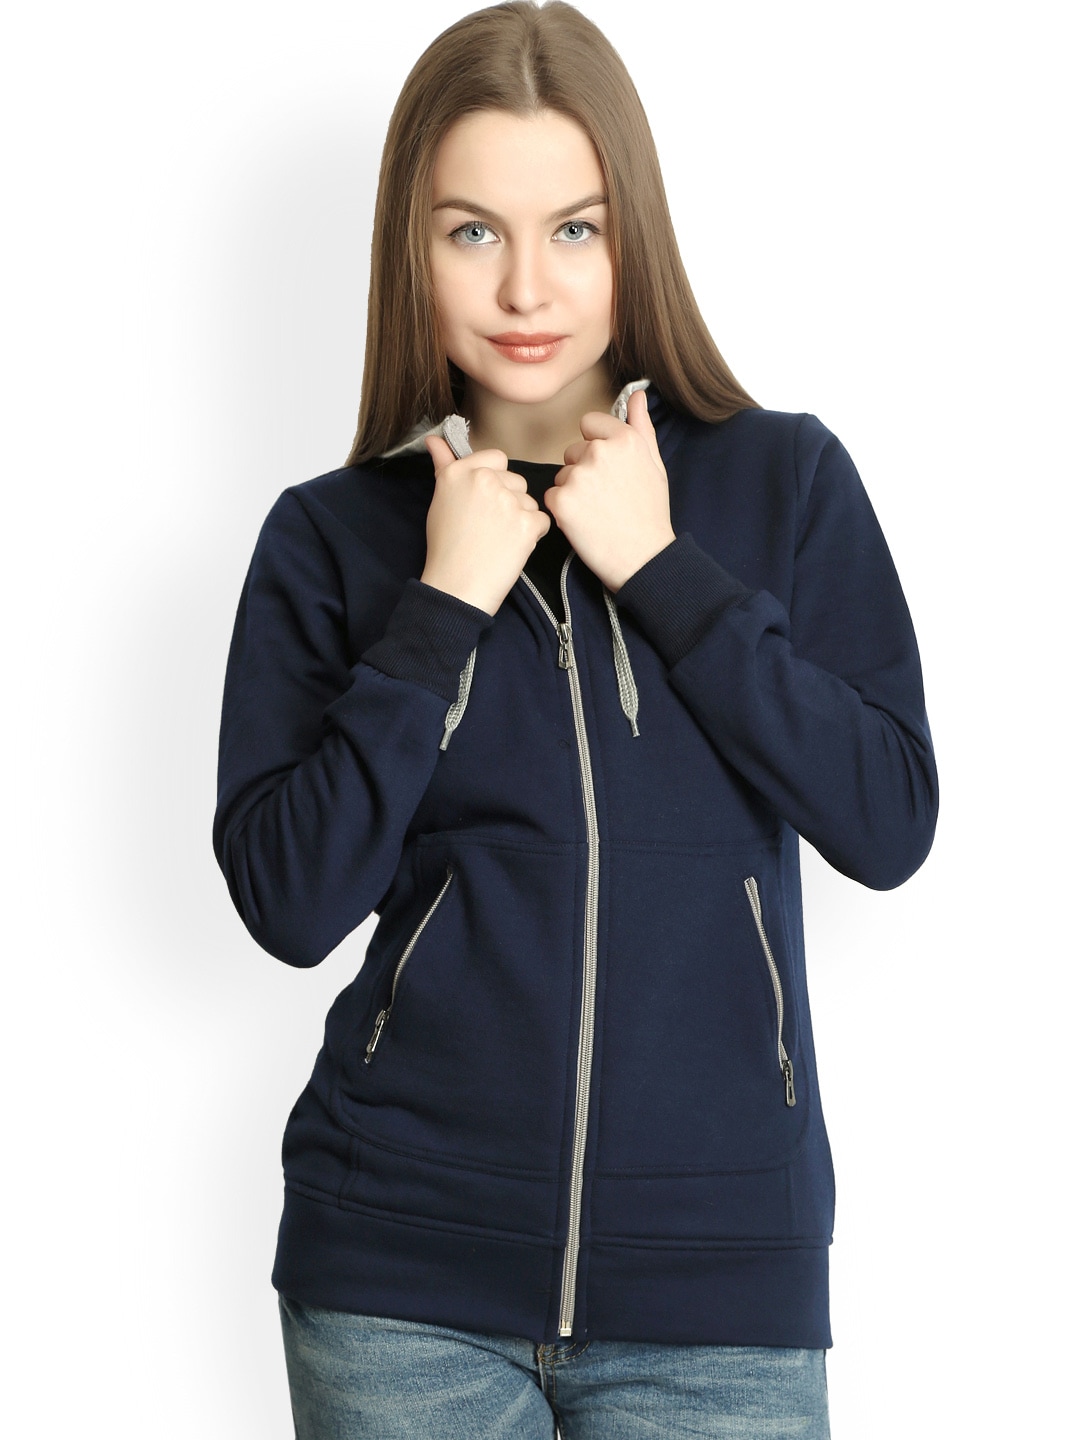 Belle Fille Women Navy Hooded Sweatshirt Price in India